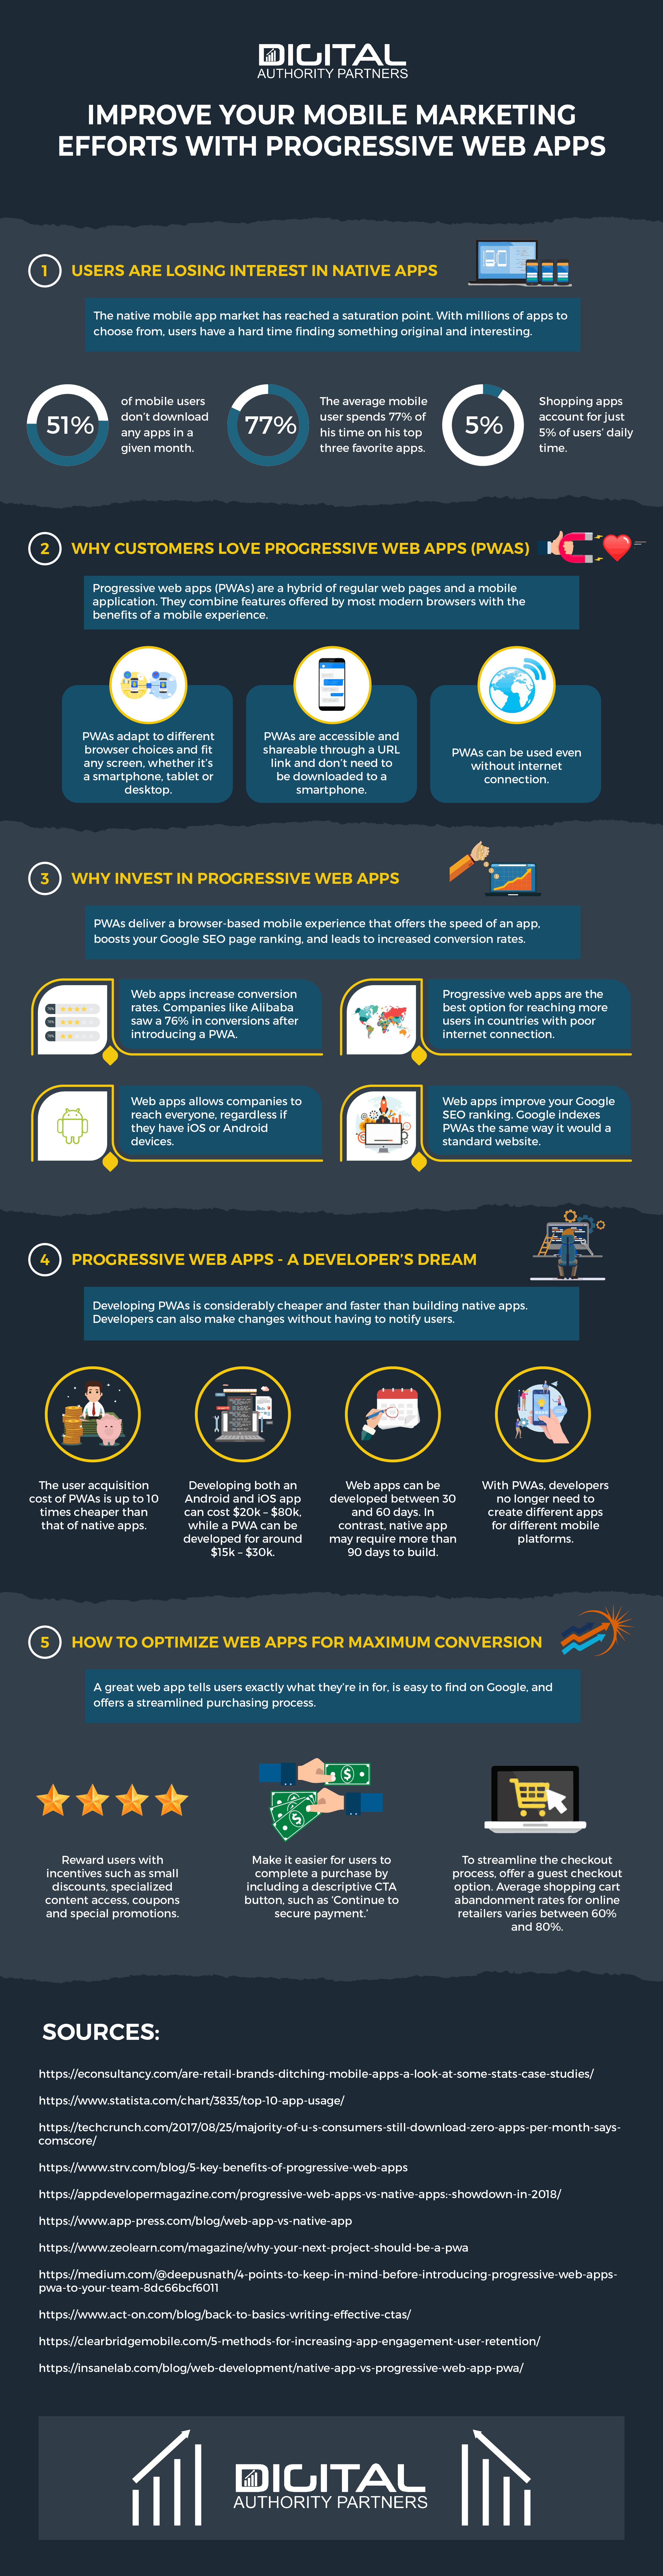 infographic explaining the benefits of progressive web apps 